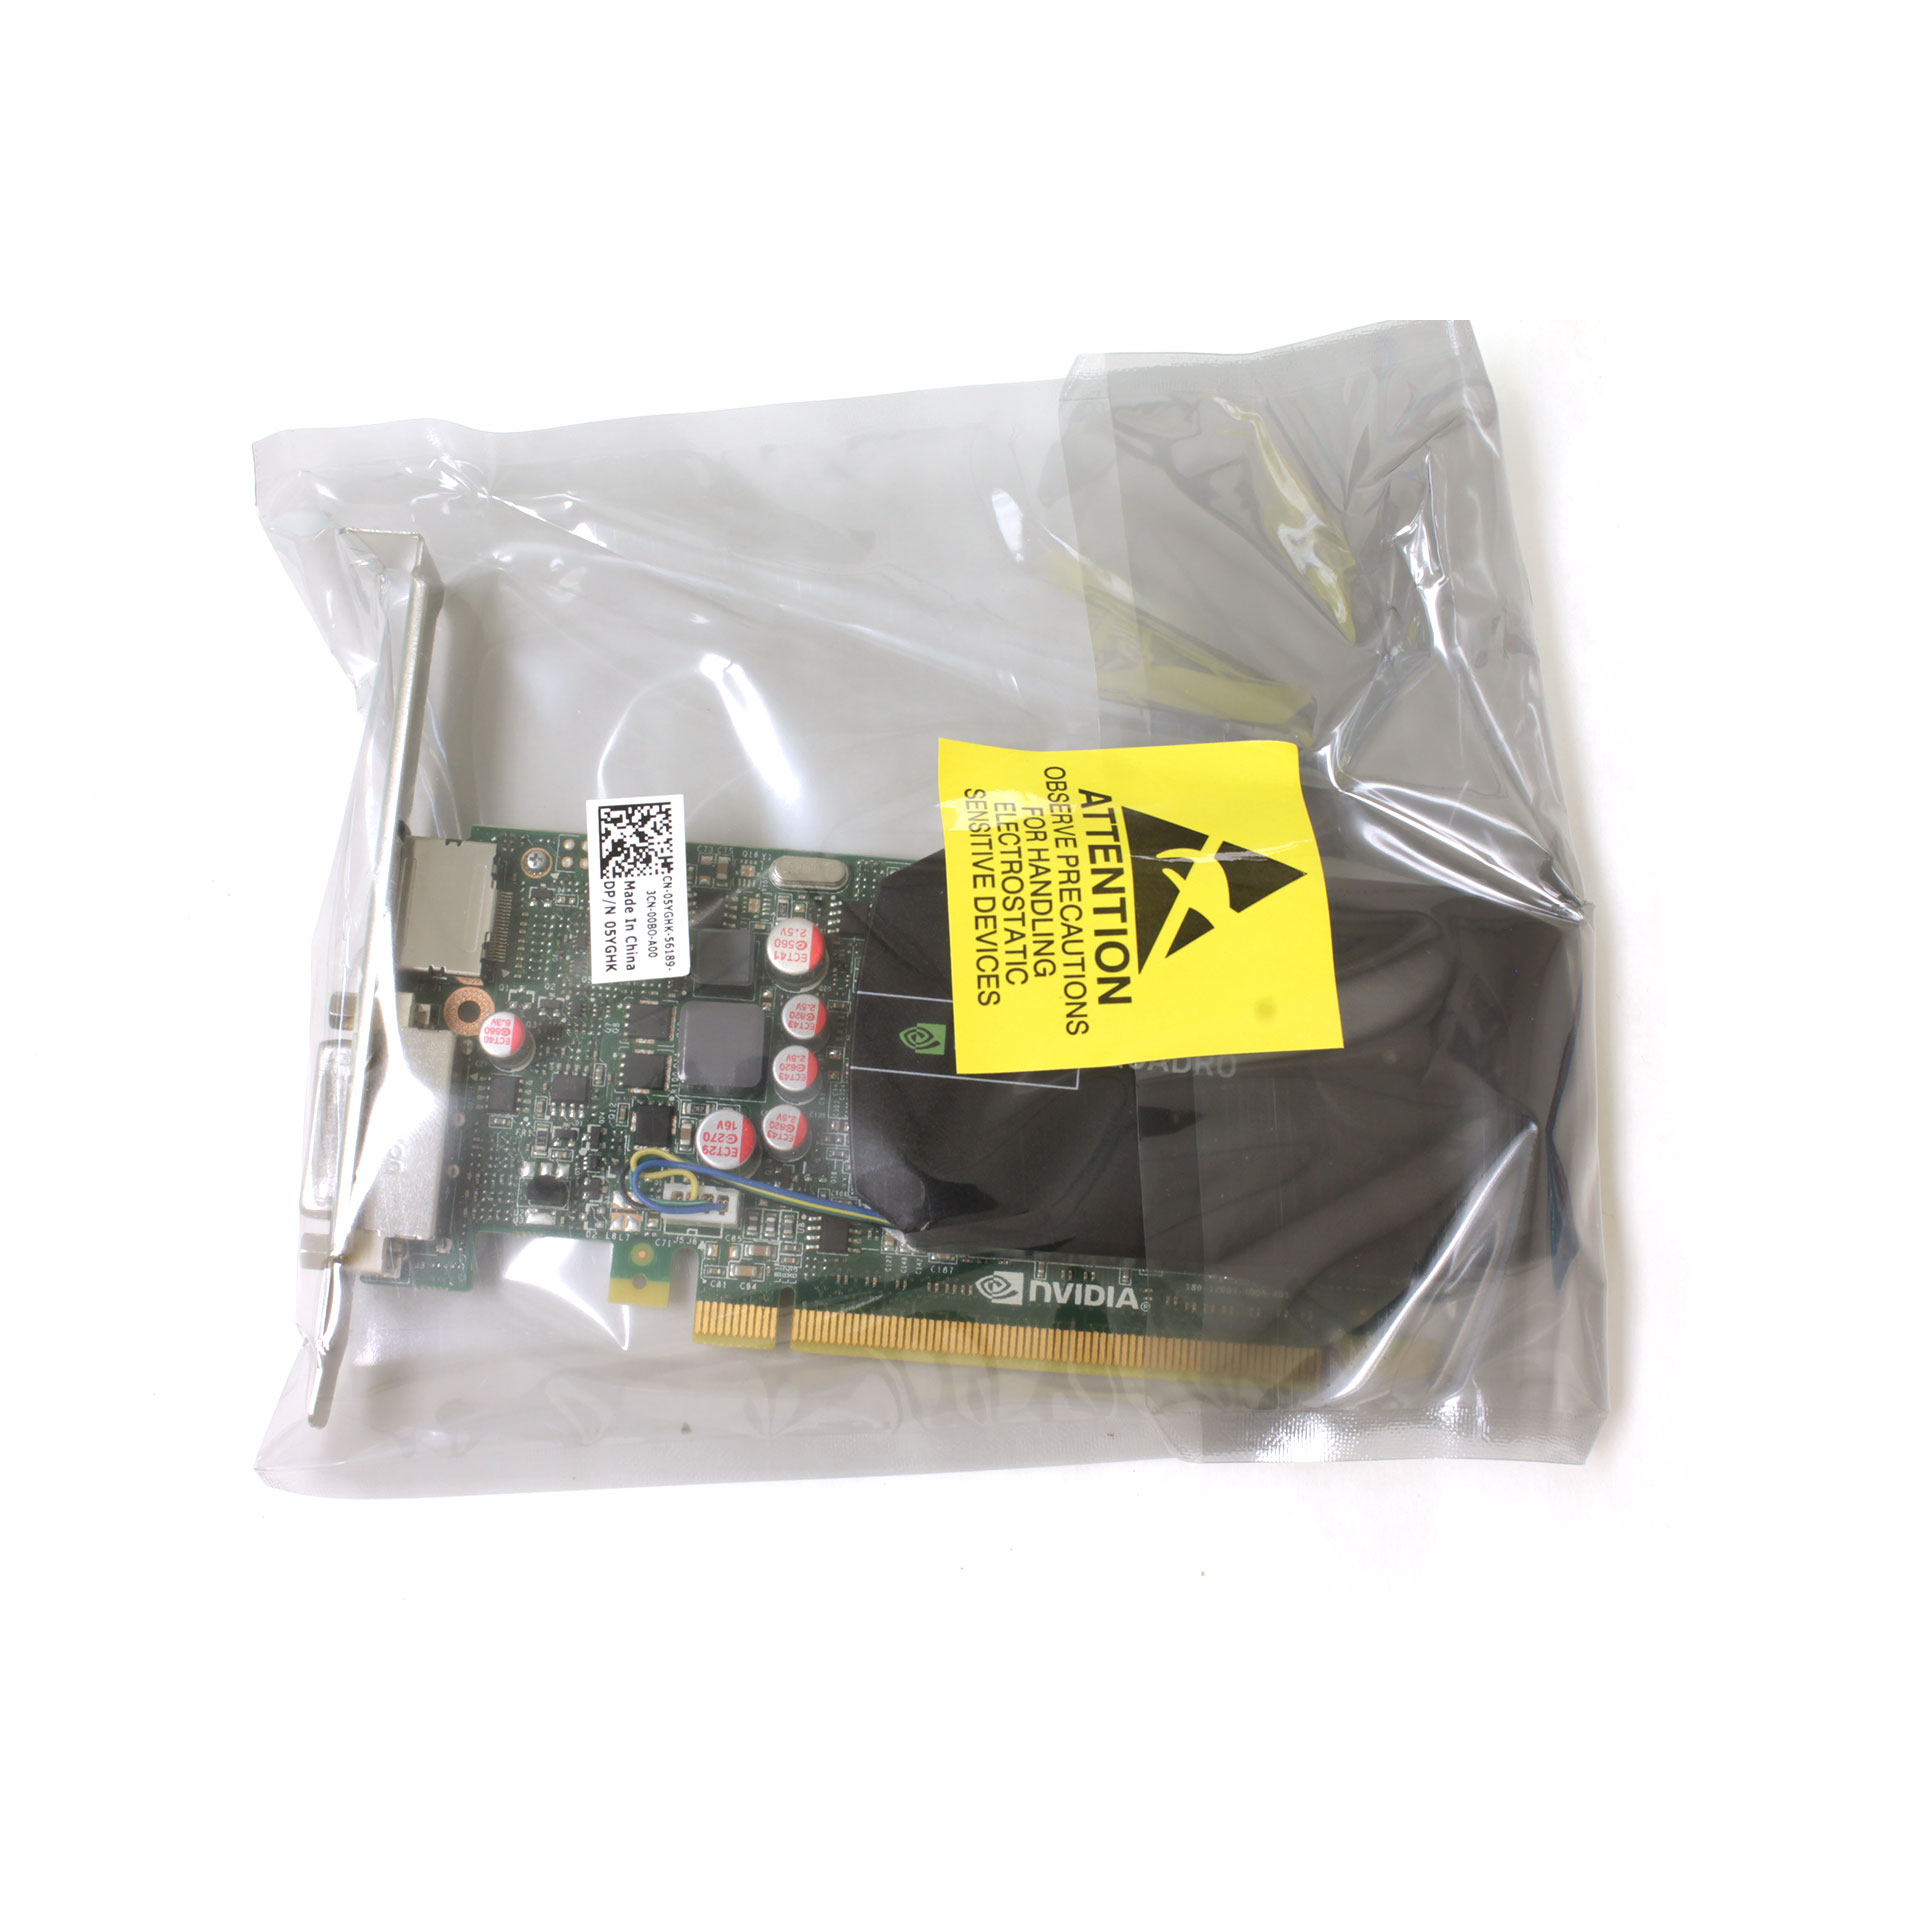 nVidia Quadro 600 1GB DDR3 PCI-Ex16 Dell 5YGHK Video Card DP DVI